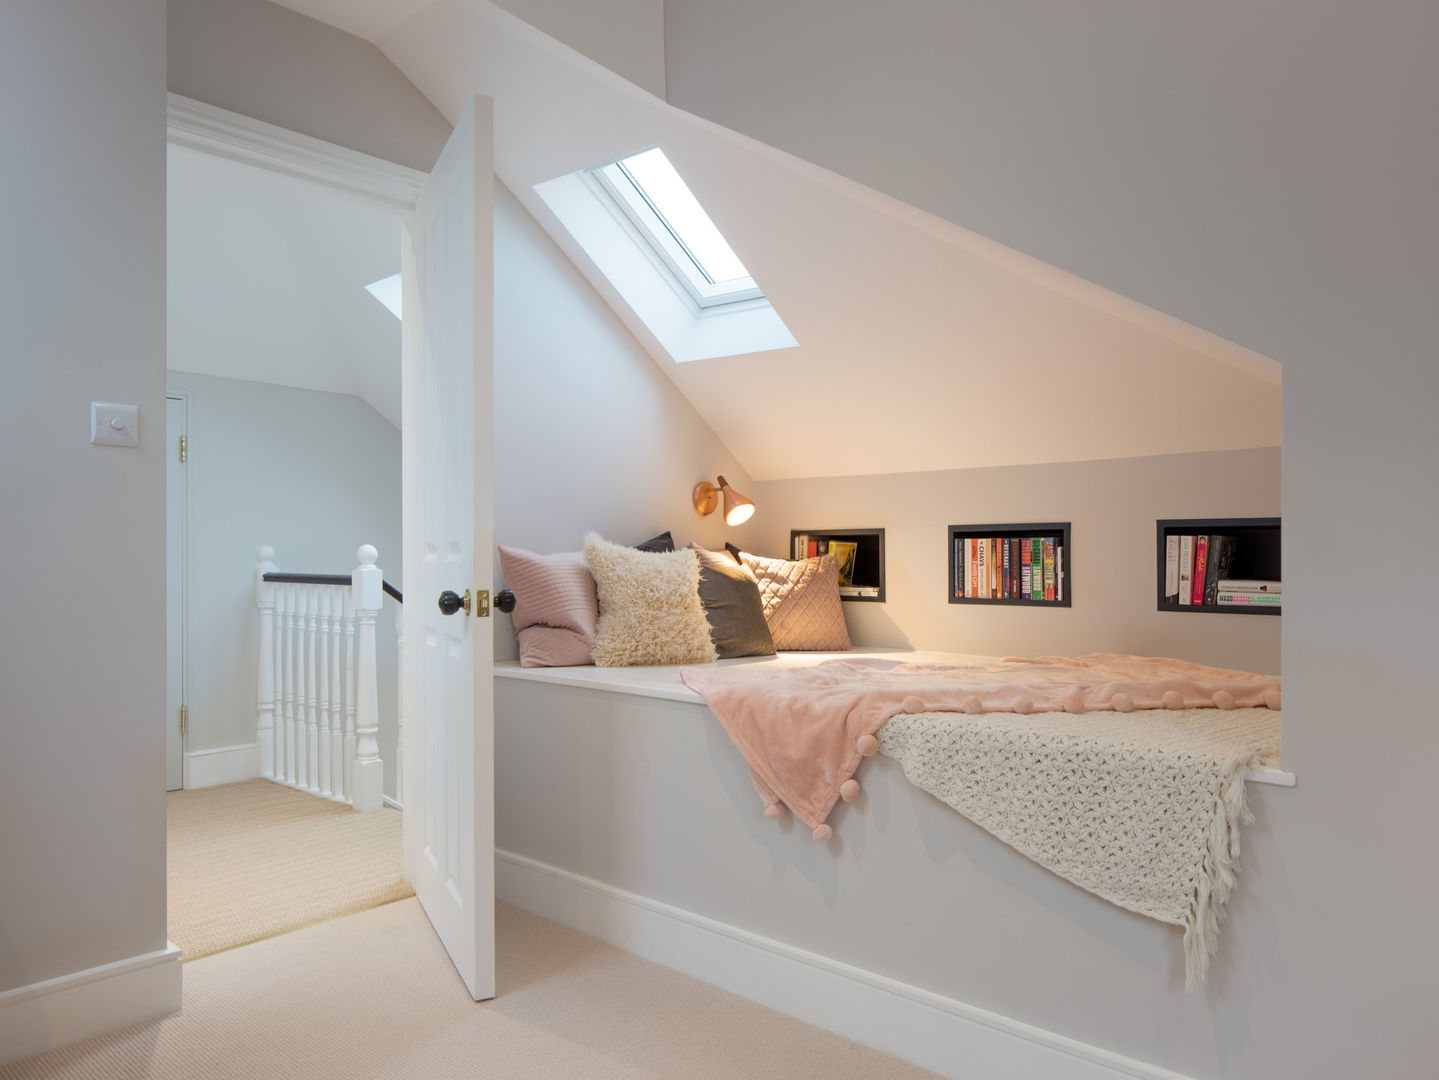 Loft nook homify Modern style bedroom loft bed,loft,readingnook,nook